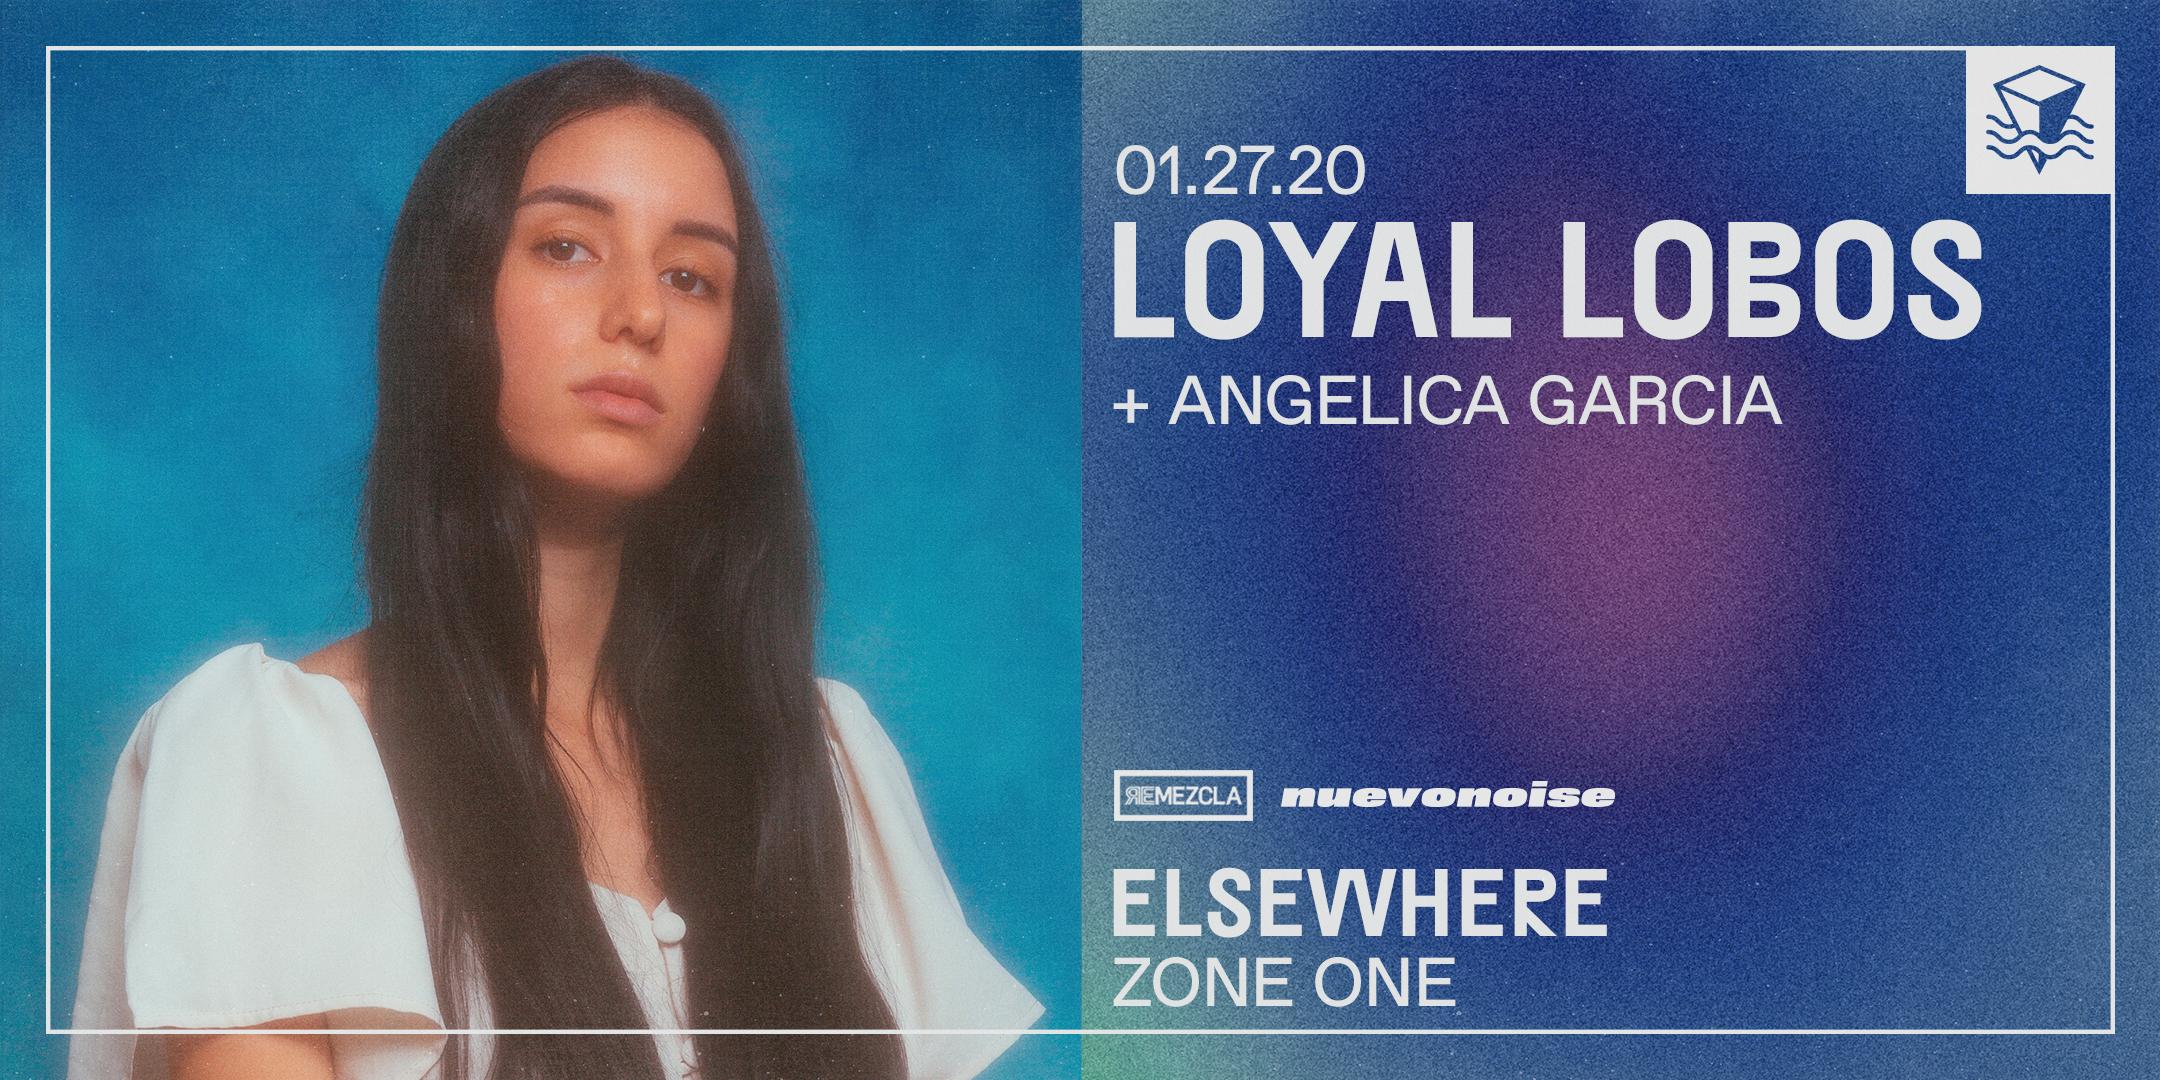 Nuevo Noise: Loyal Lobos @ Elsewhere (Zone One)